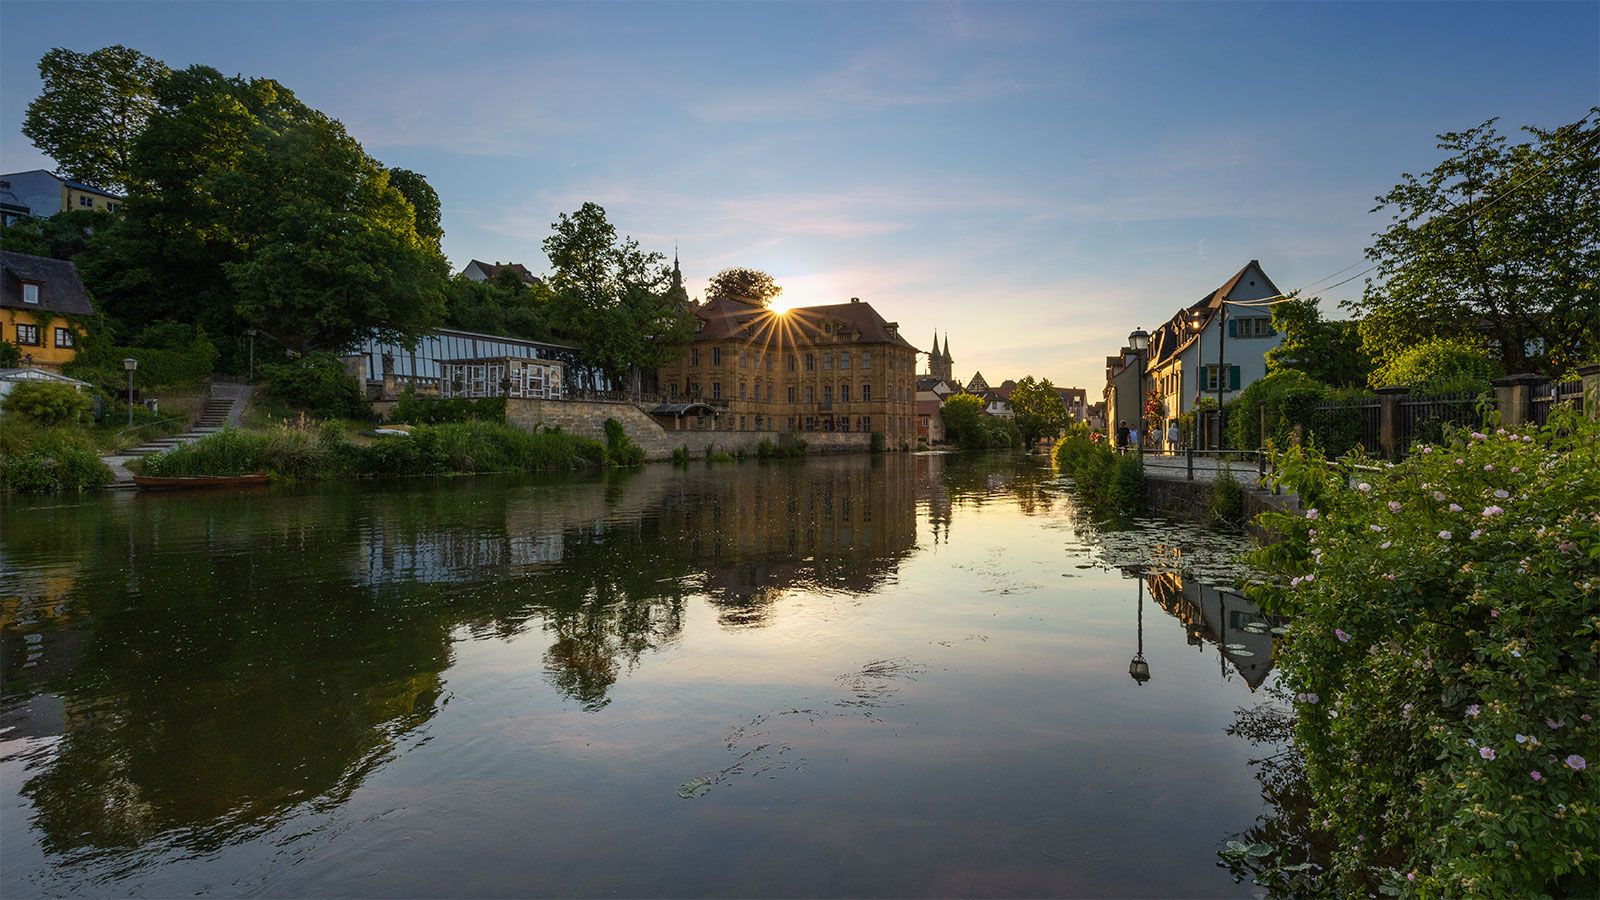 Barockvilla in Bamberg zum Sonnenuntergang (411_MG_7927_2)